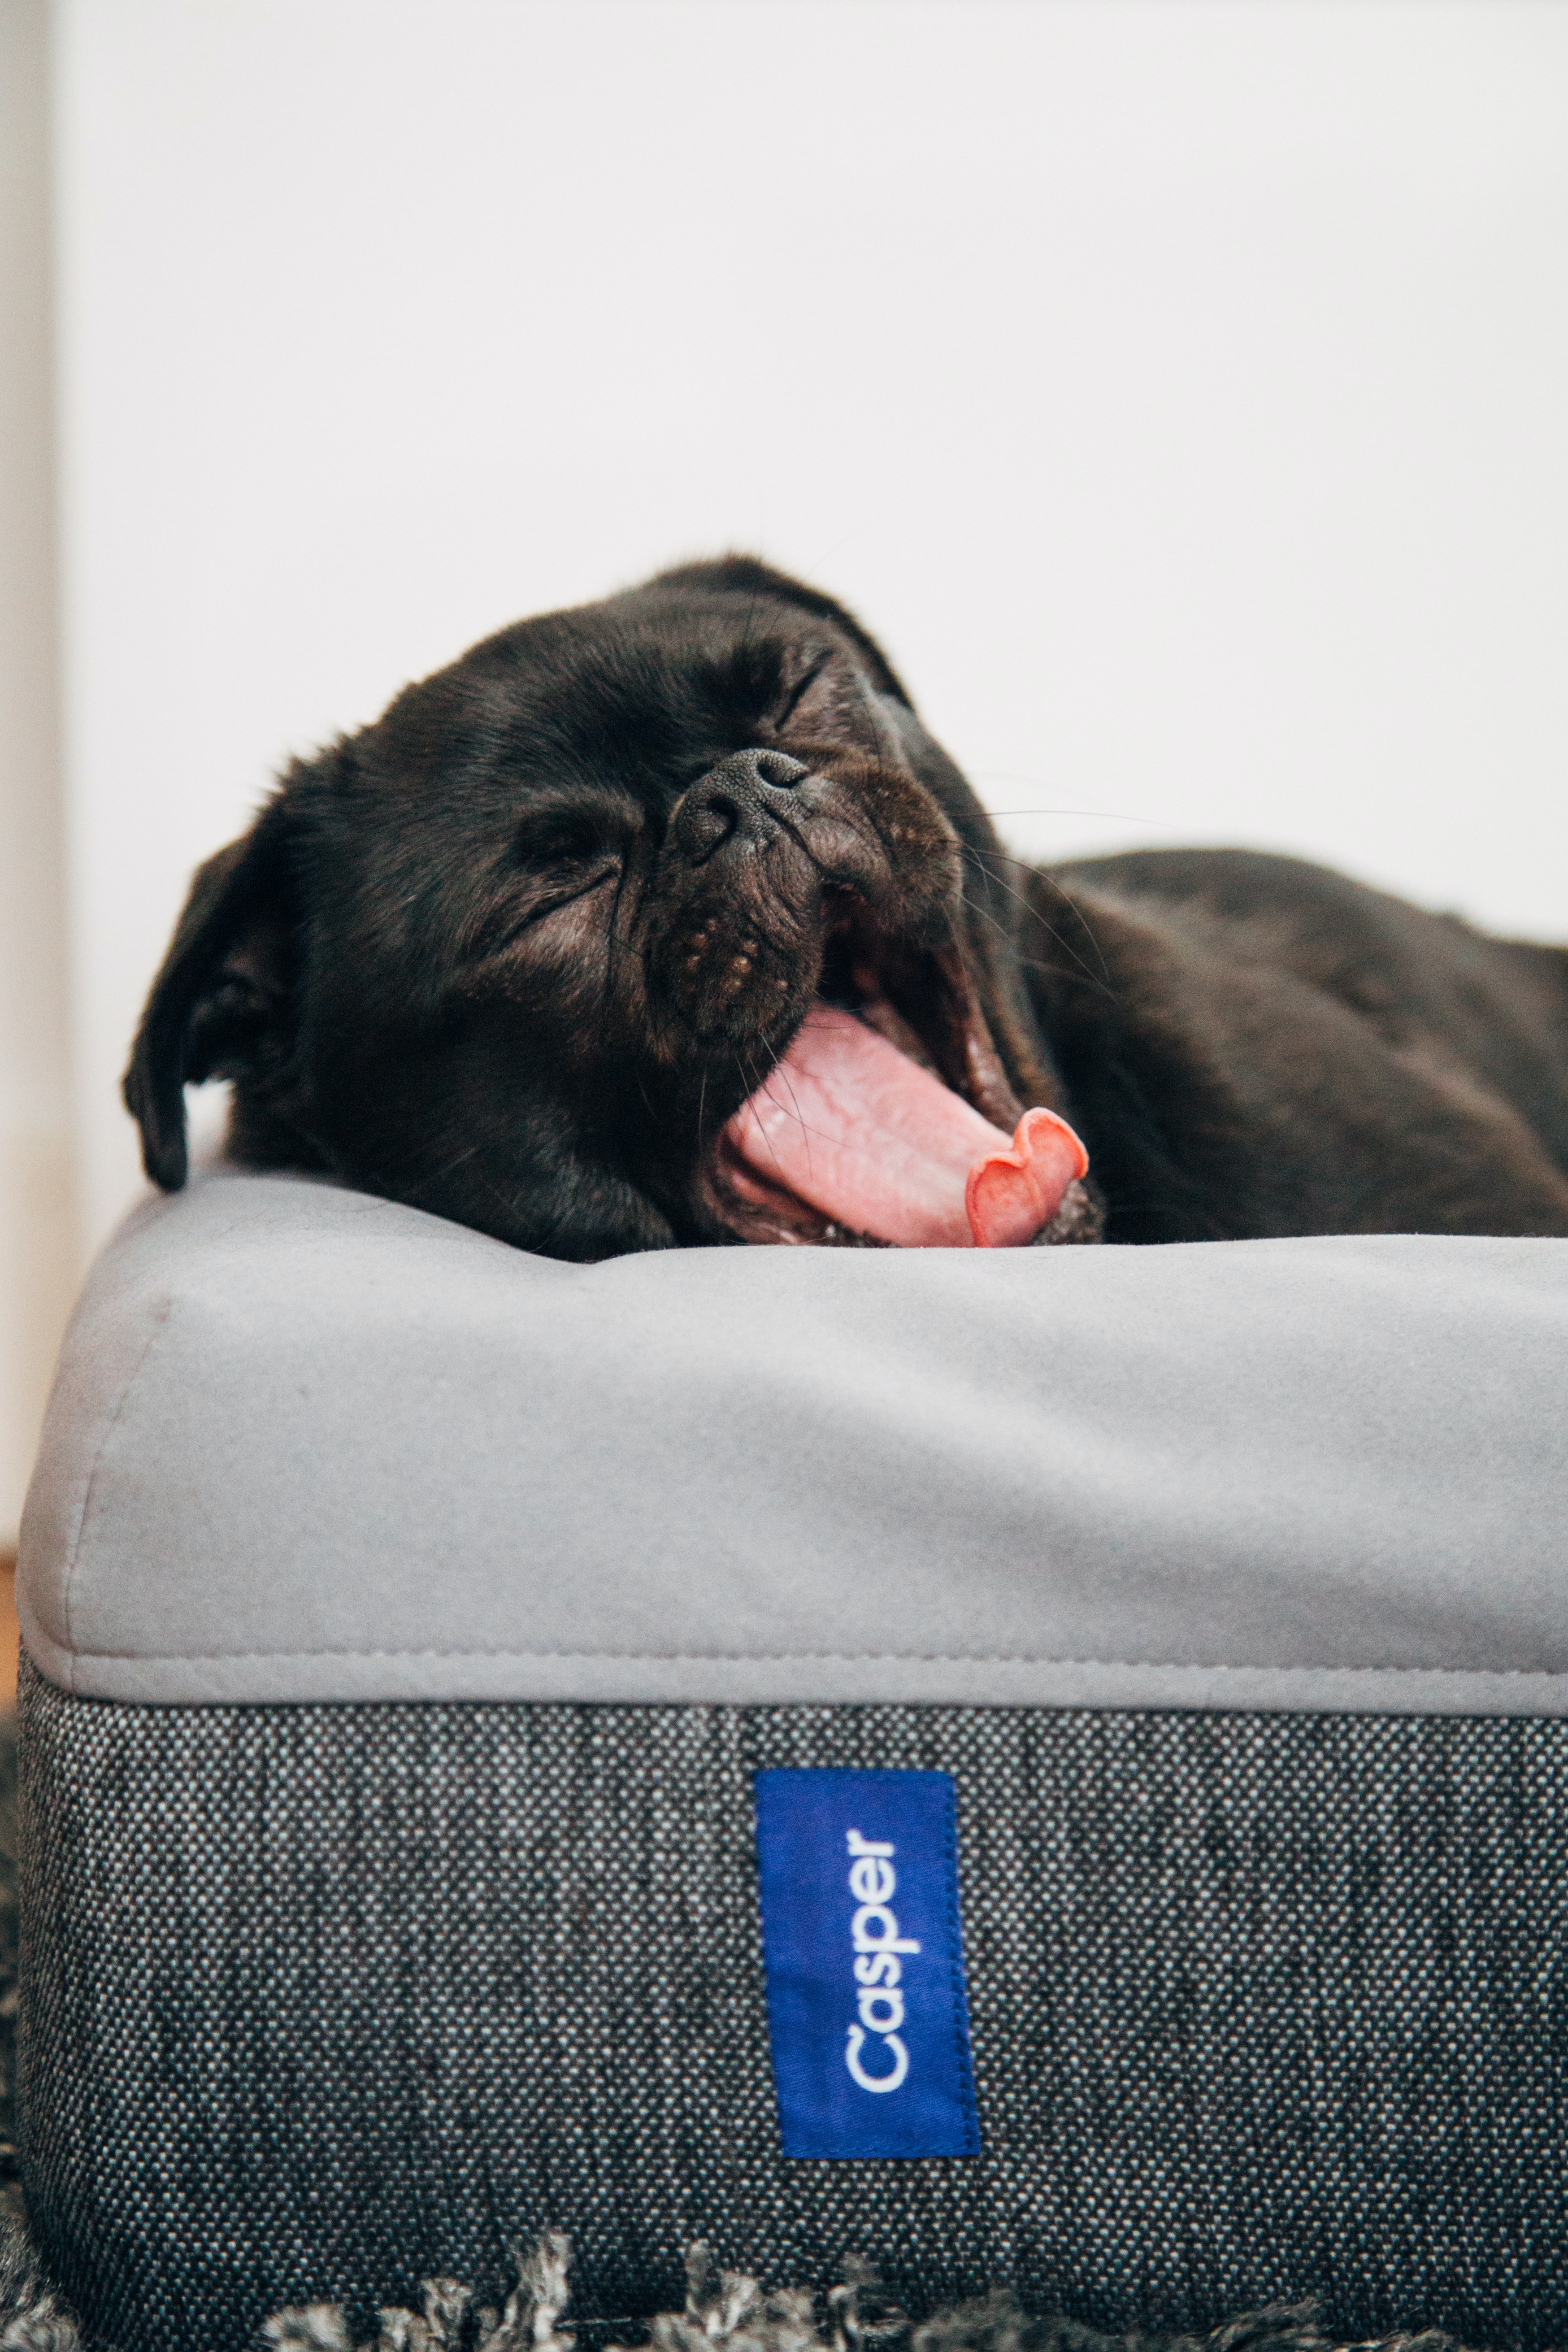 Photo by Charles Deluvio on Unsplash
puppy  yawning, tired dog, dog sleeping